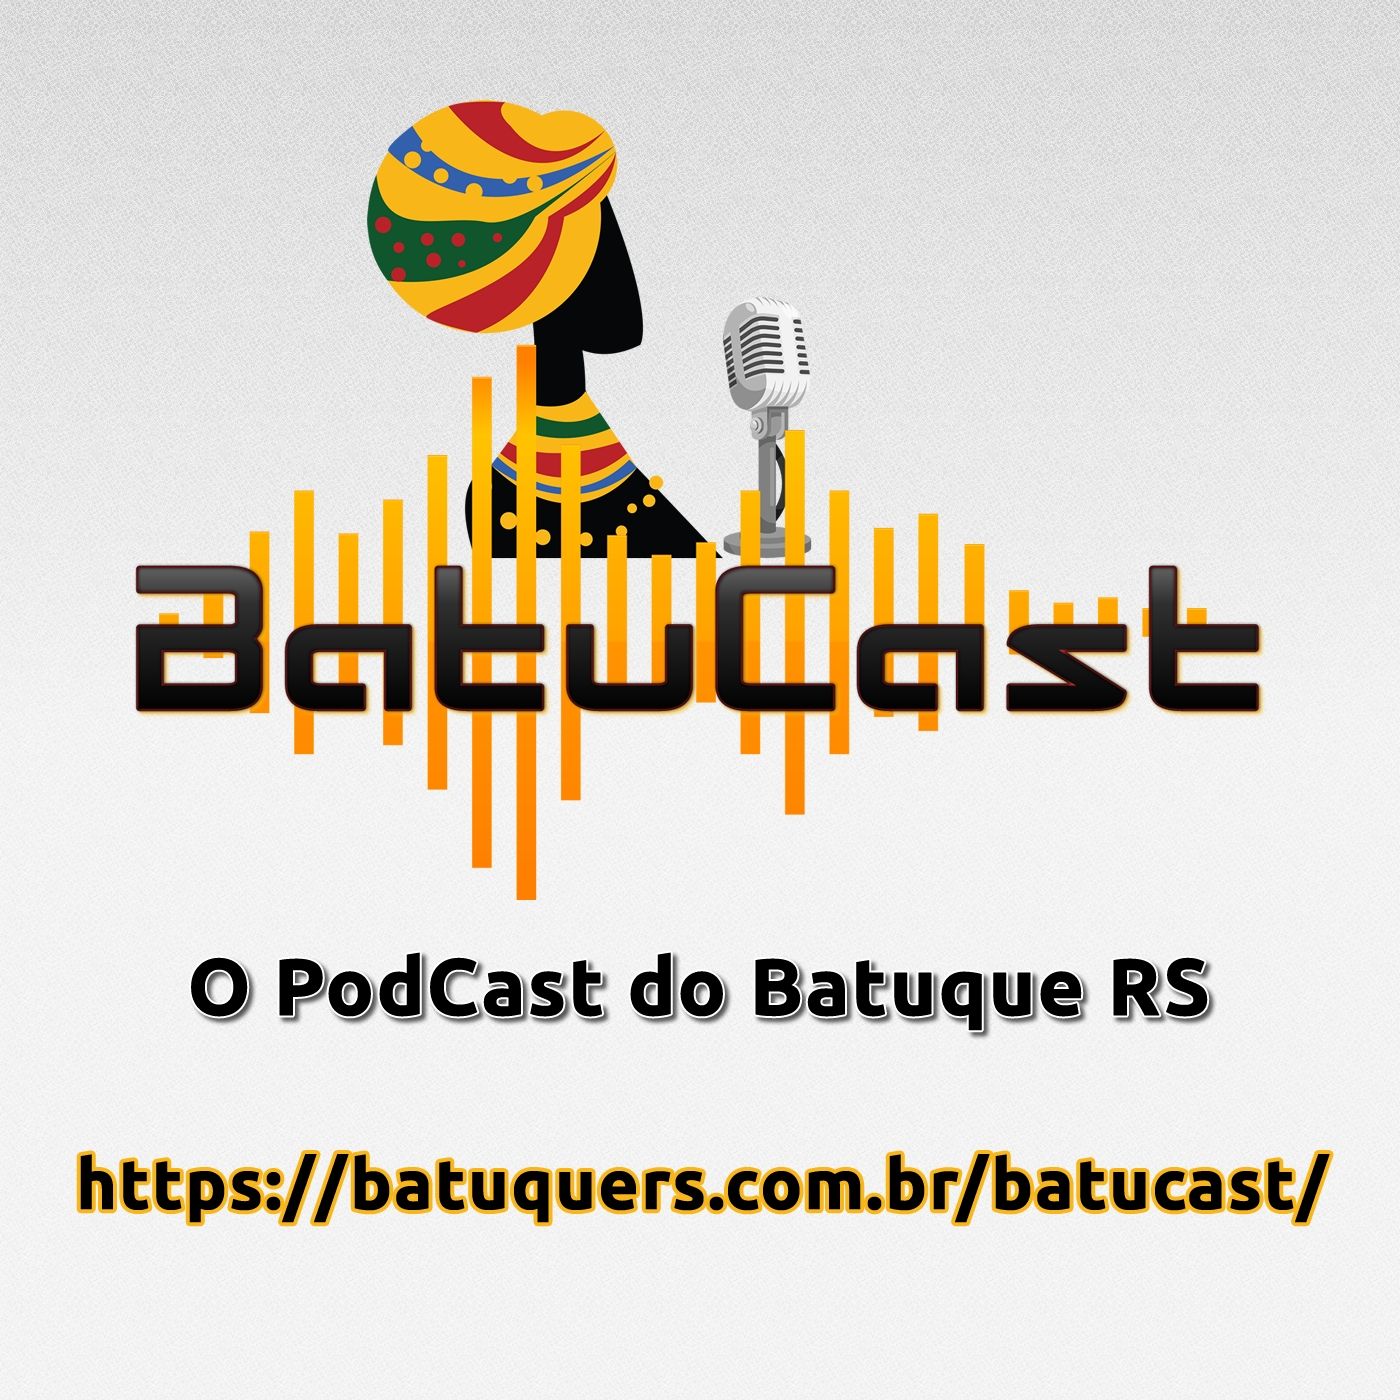 BatuCast - #0031 - Quaresma